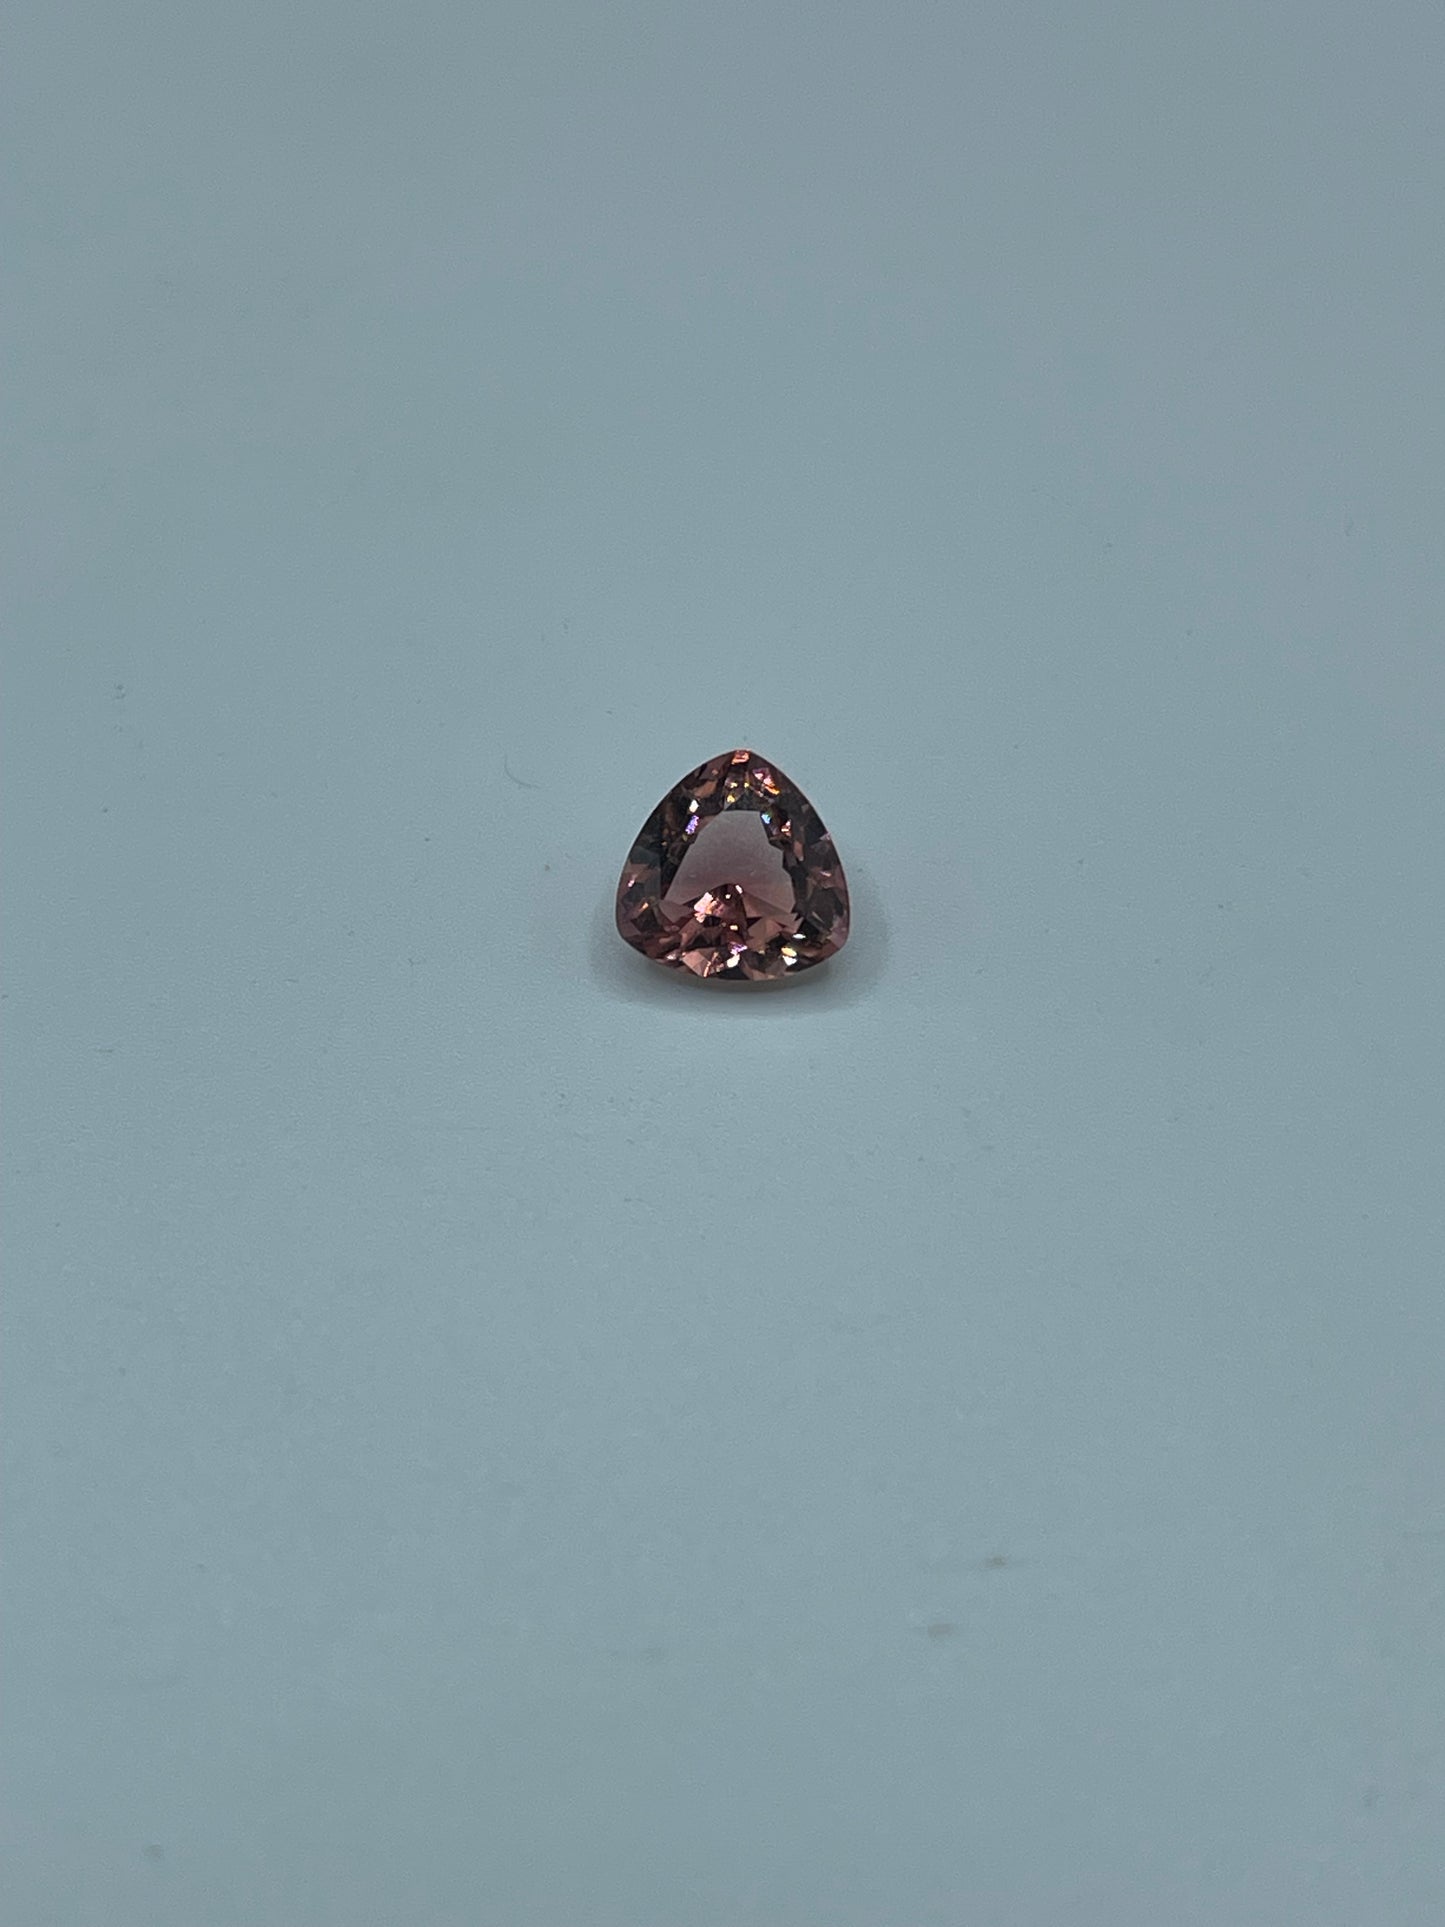 2.21 Carat Natural Zambian Rubellite Tourmaline Trillion Cut Loose Gemstone (8.4 x 8.4 x 4.9 MM)